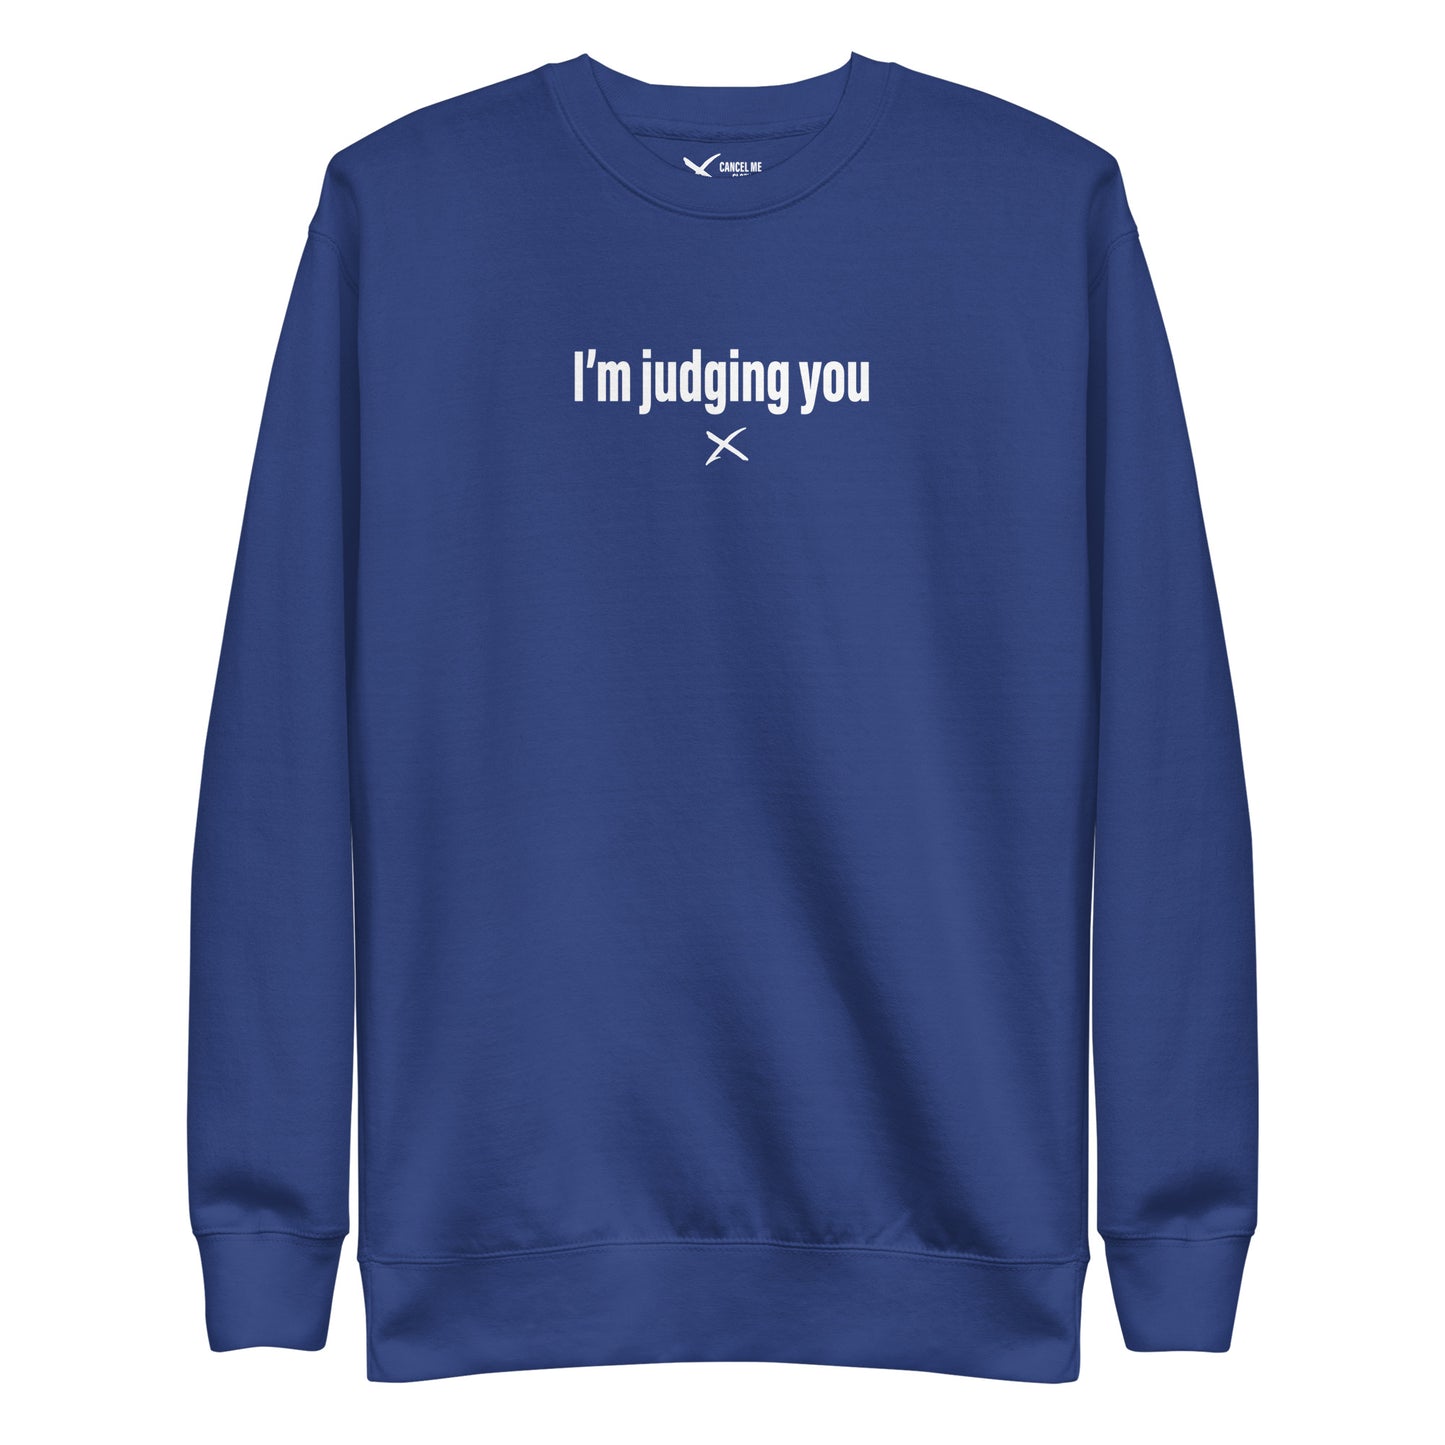 I'm judging you - Sweatshirt